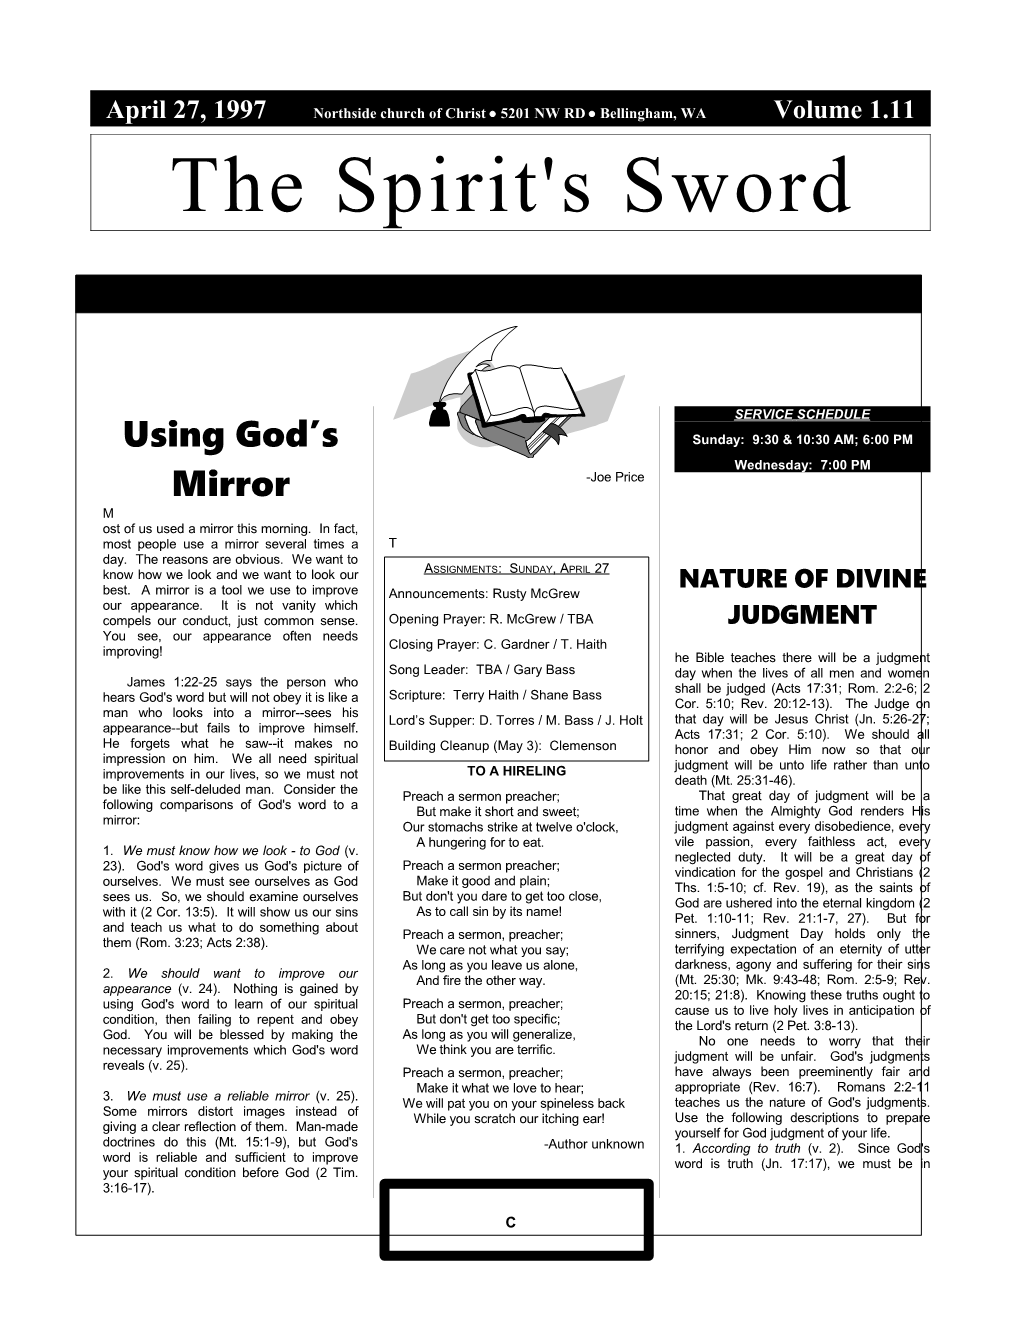 The Spirit's Sword